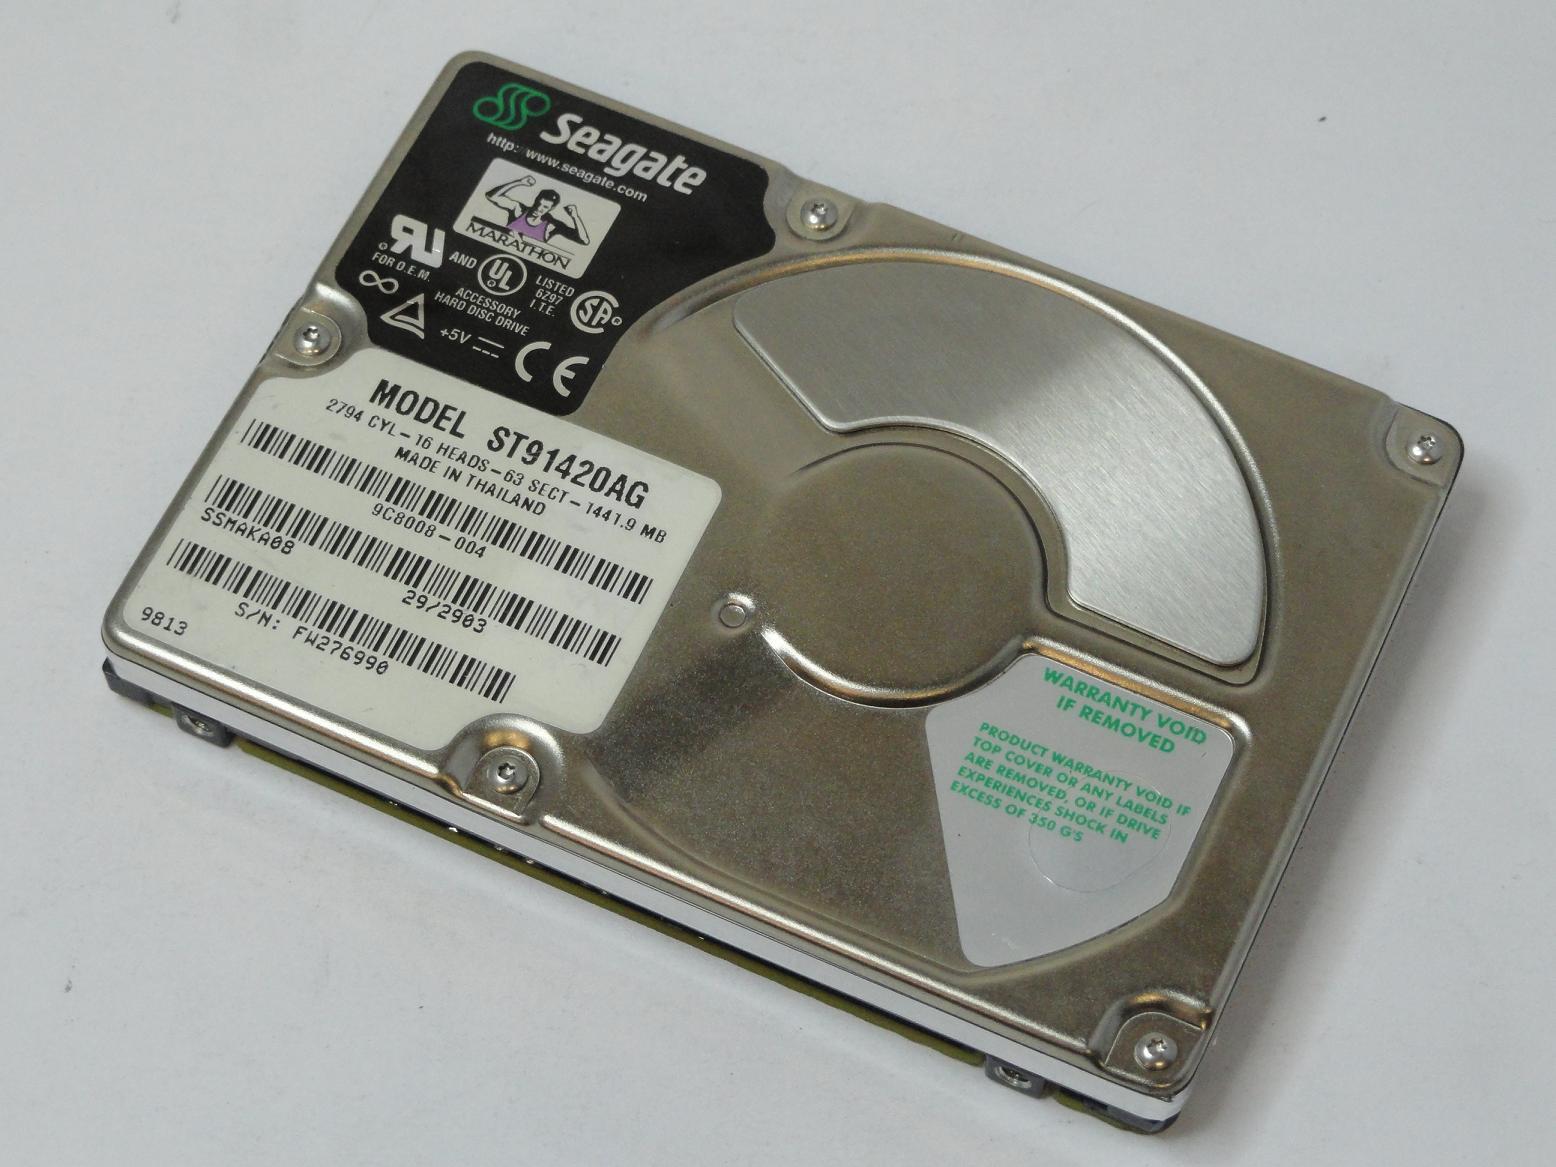 9C8008-004 - Seagate 1.4GB IDE 4500rpm 2.5in Marathon HDD - Refurbished